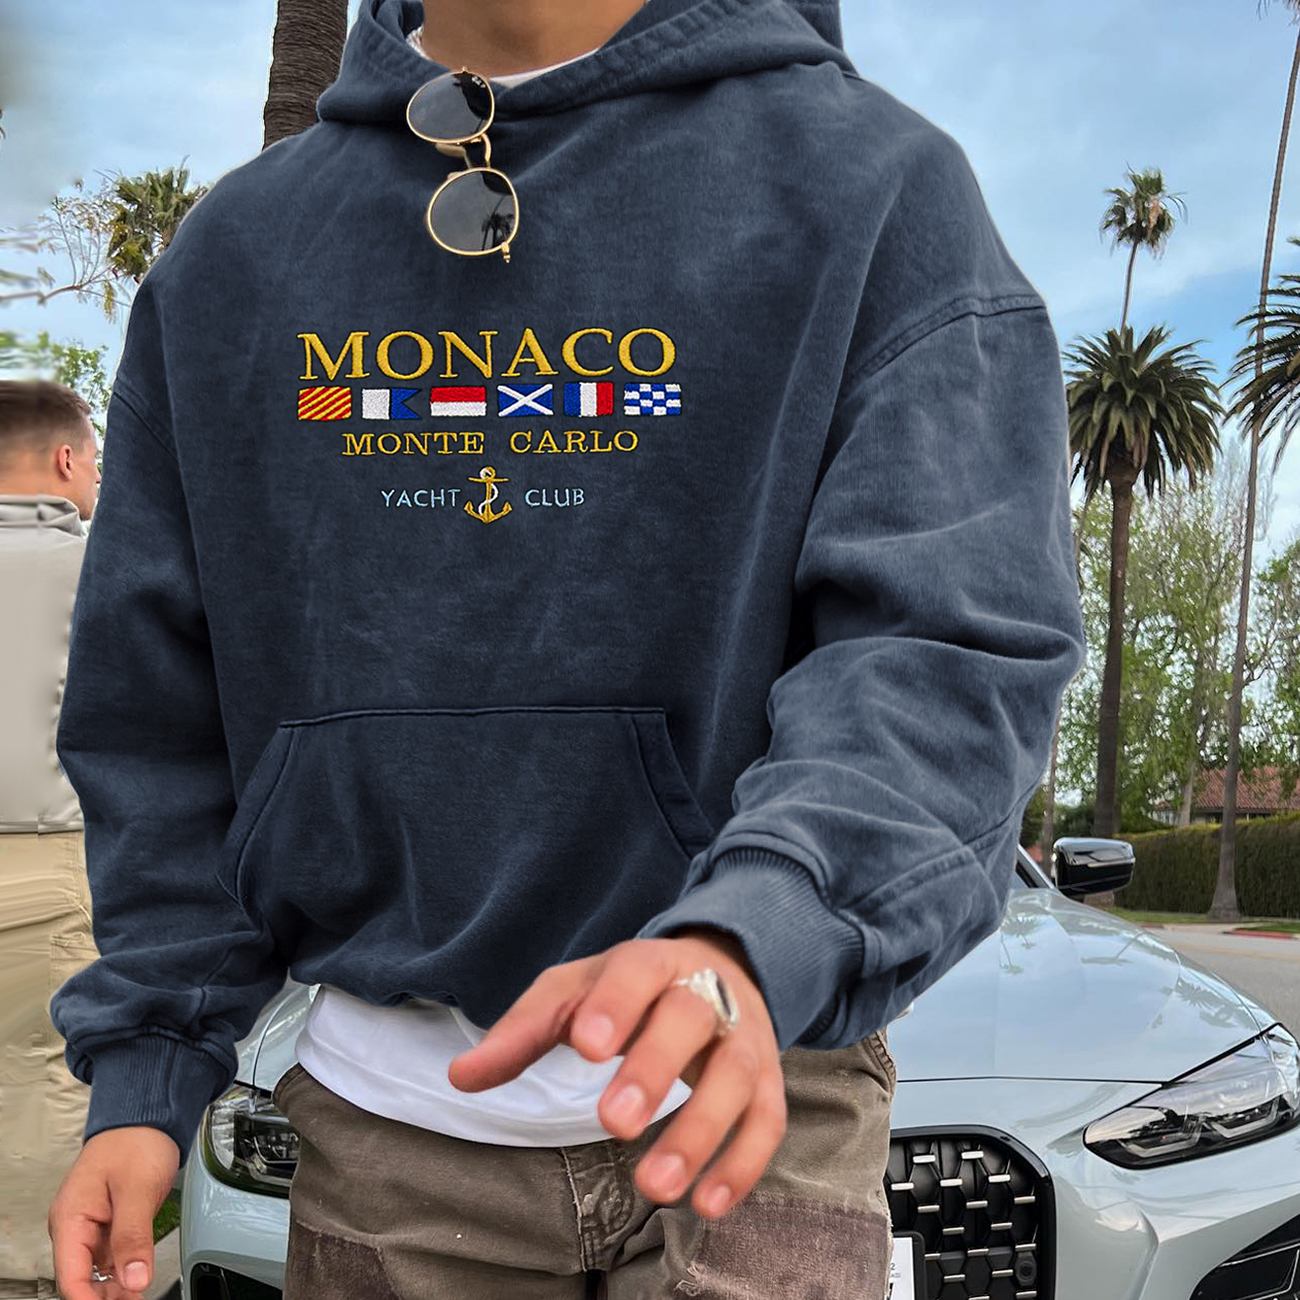 monaco yacht club clothing online